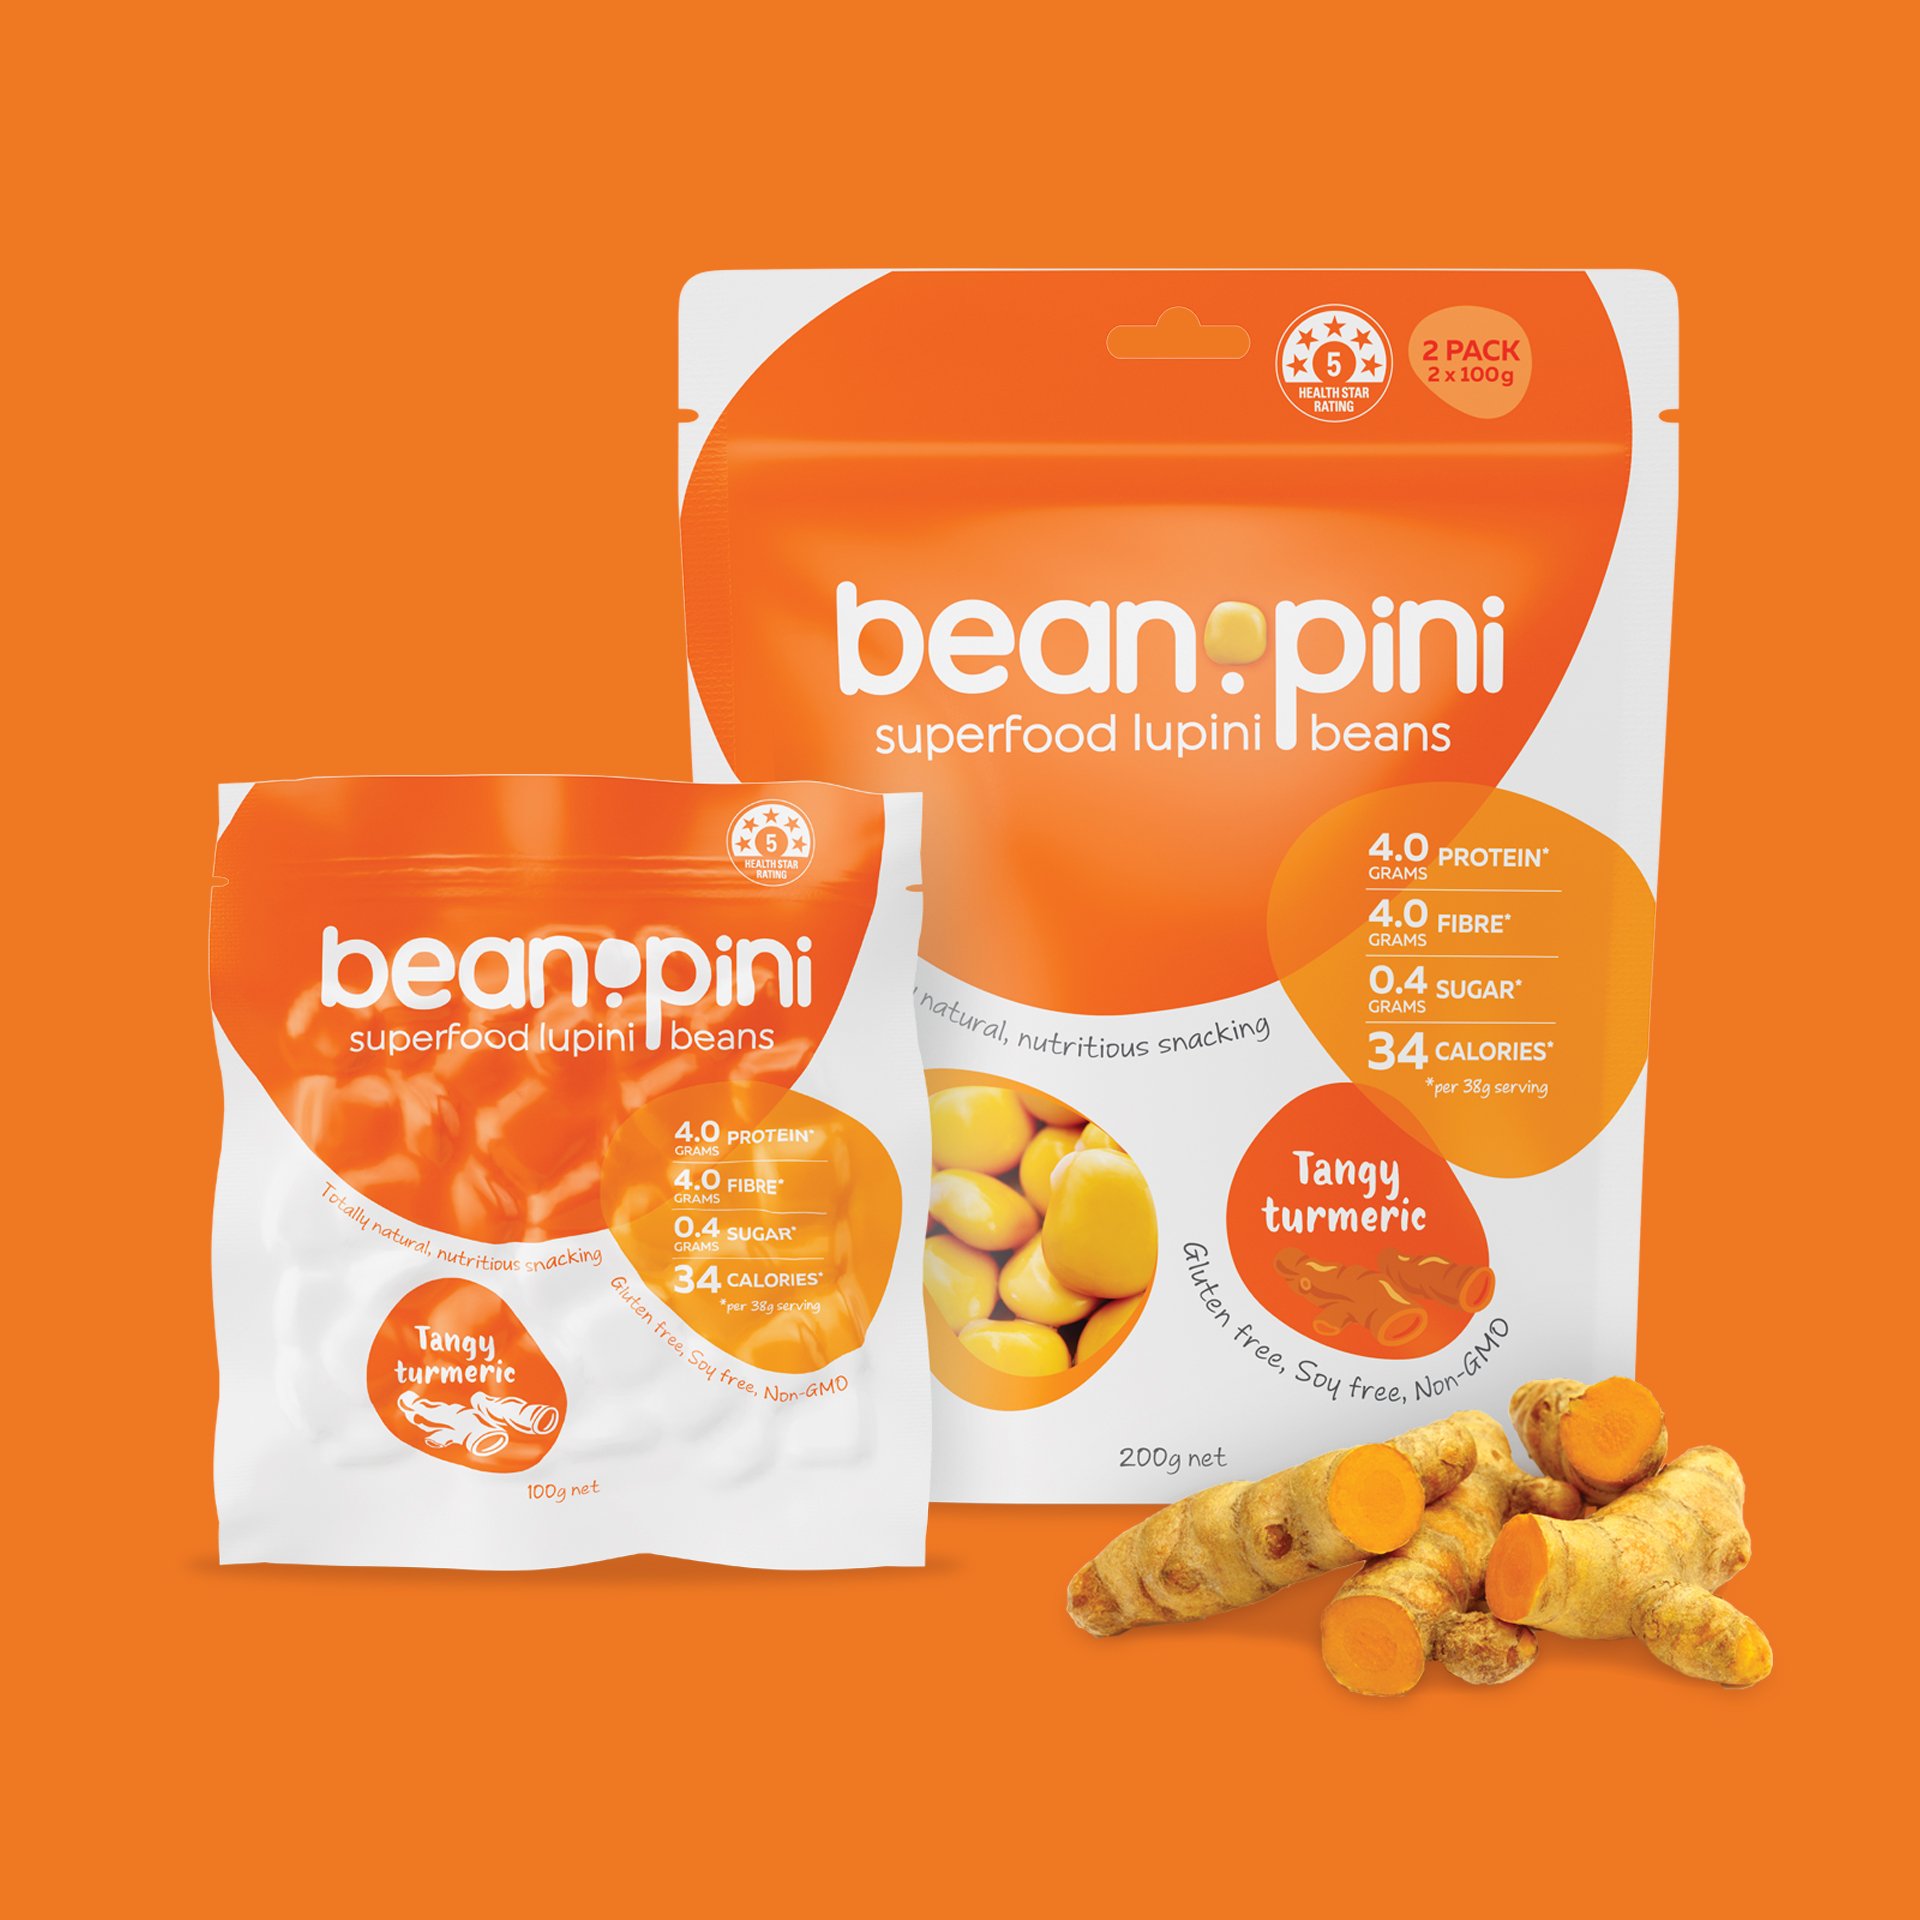 superfood packaging design Beanopini tumeric